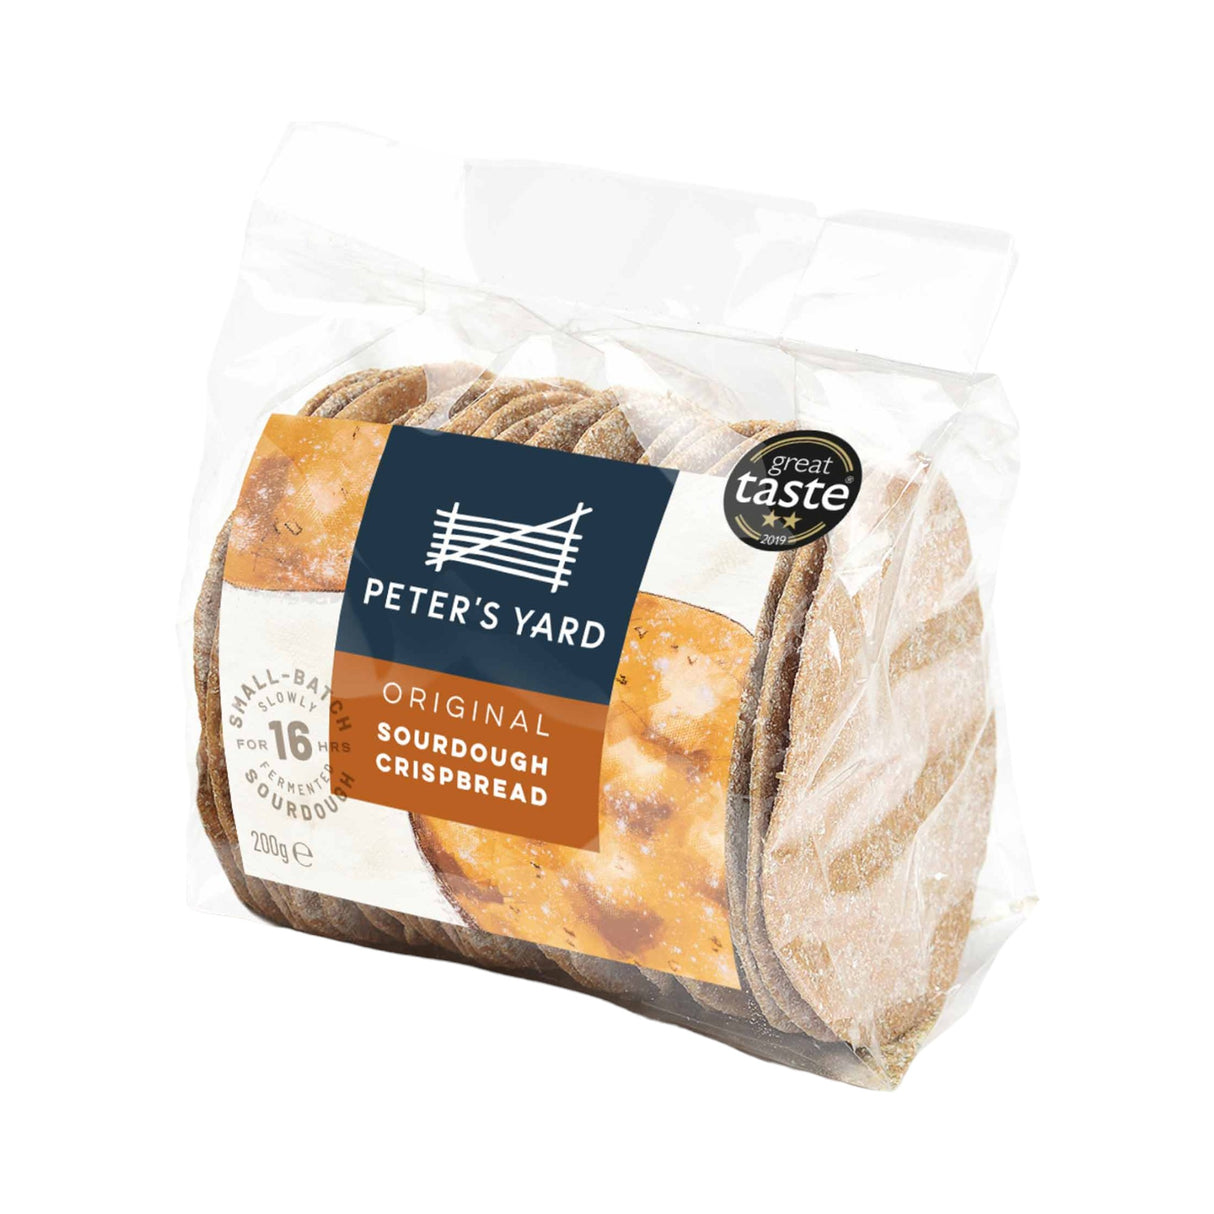 Peters Yard - Original Sourdough Crispbread Bag 200g